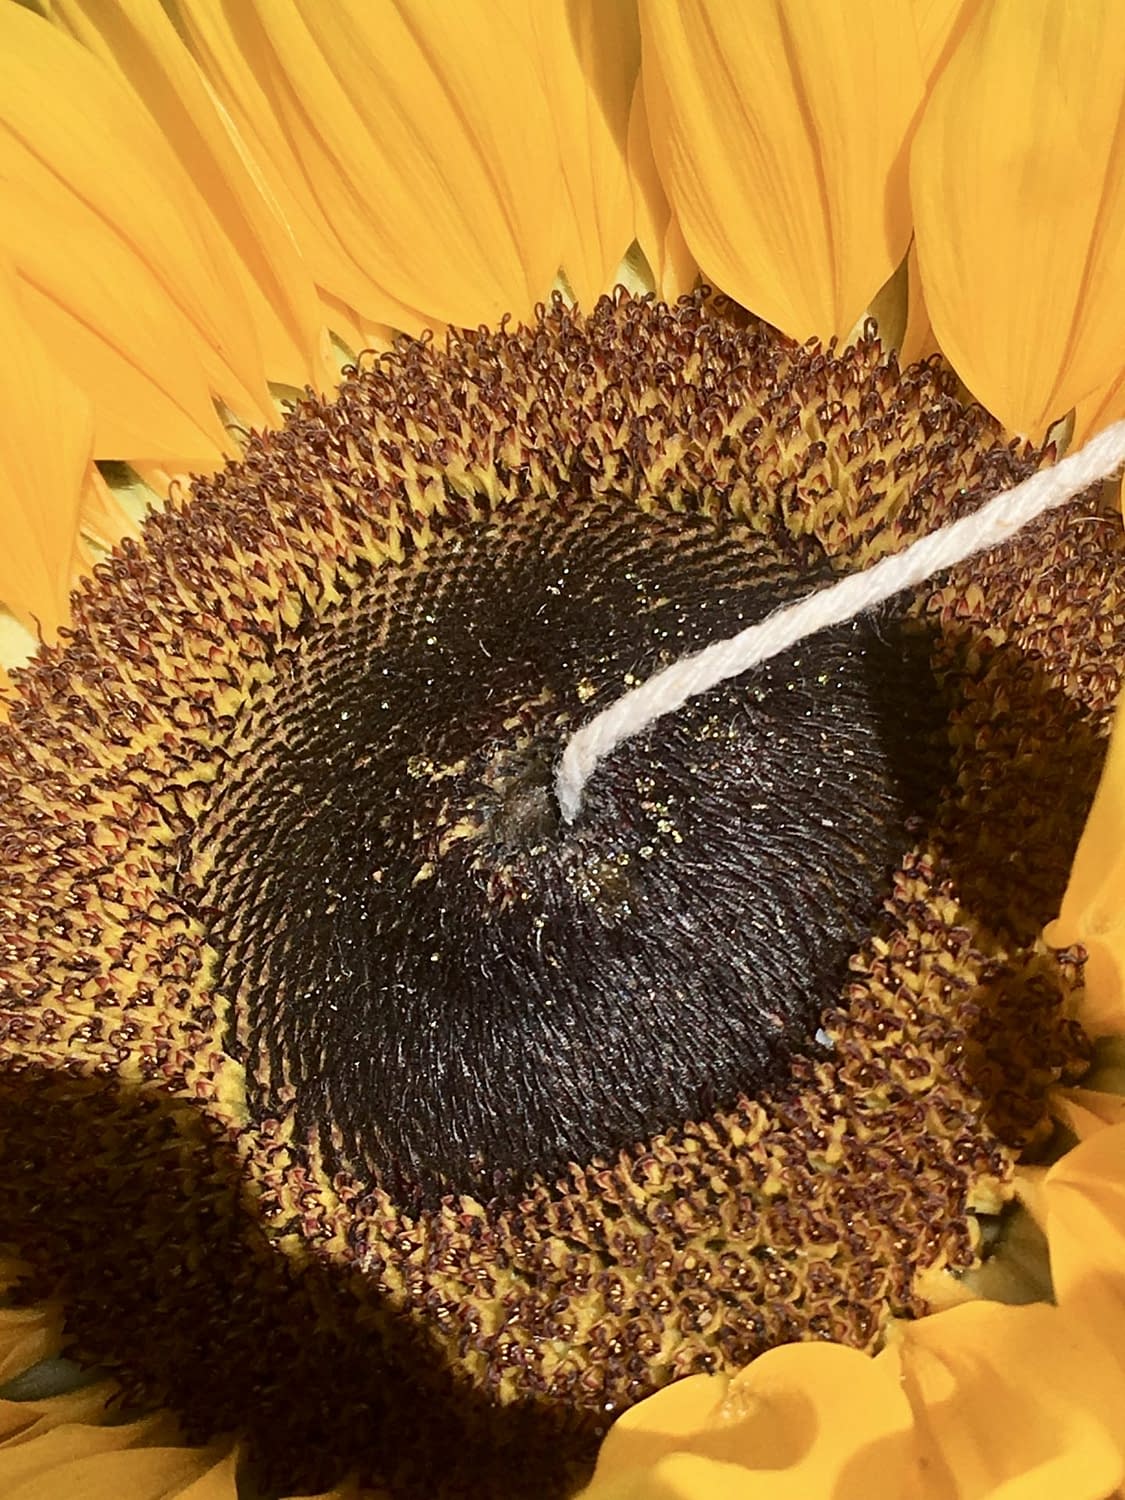 How To Make Sunflower Bird Feeders by GinGin & Roo